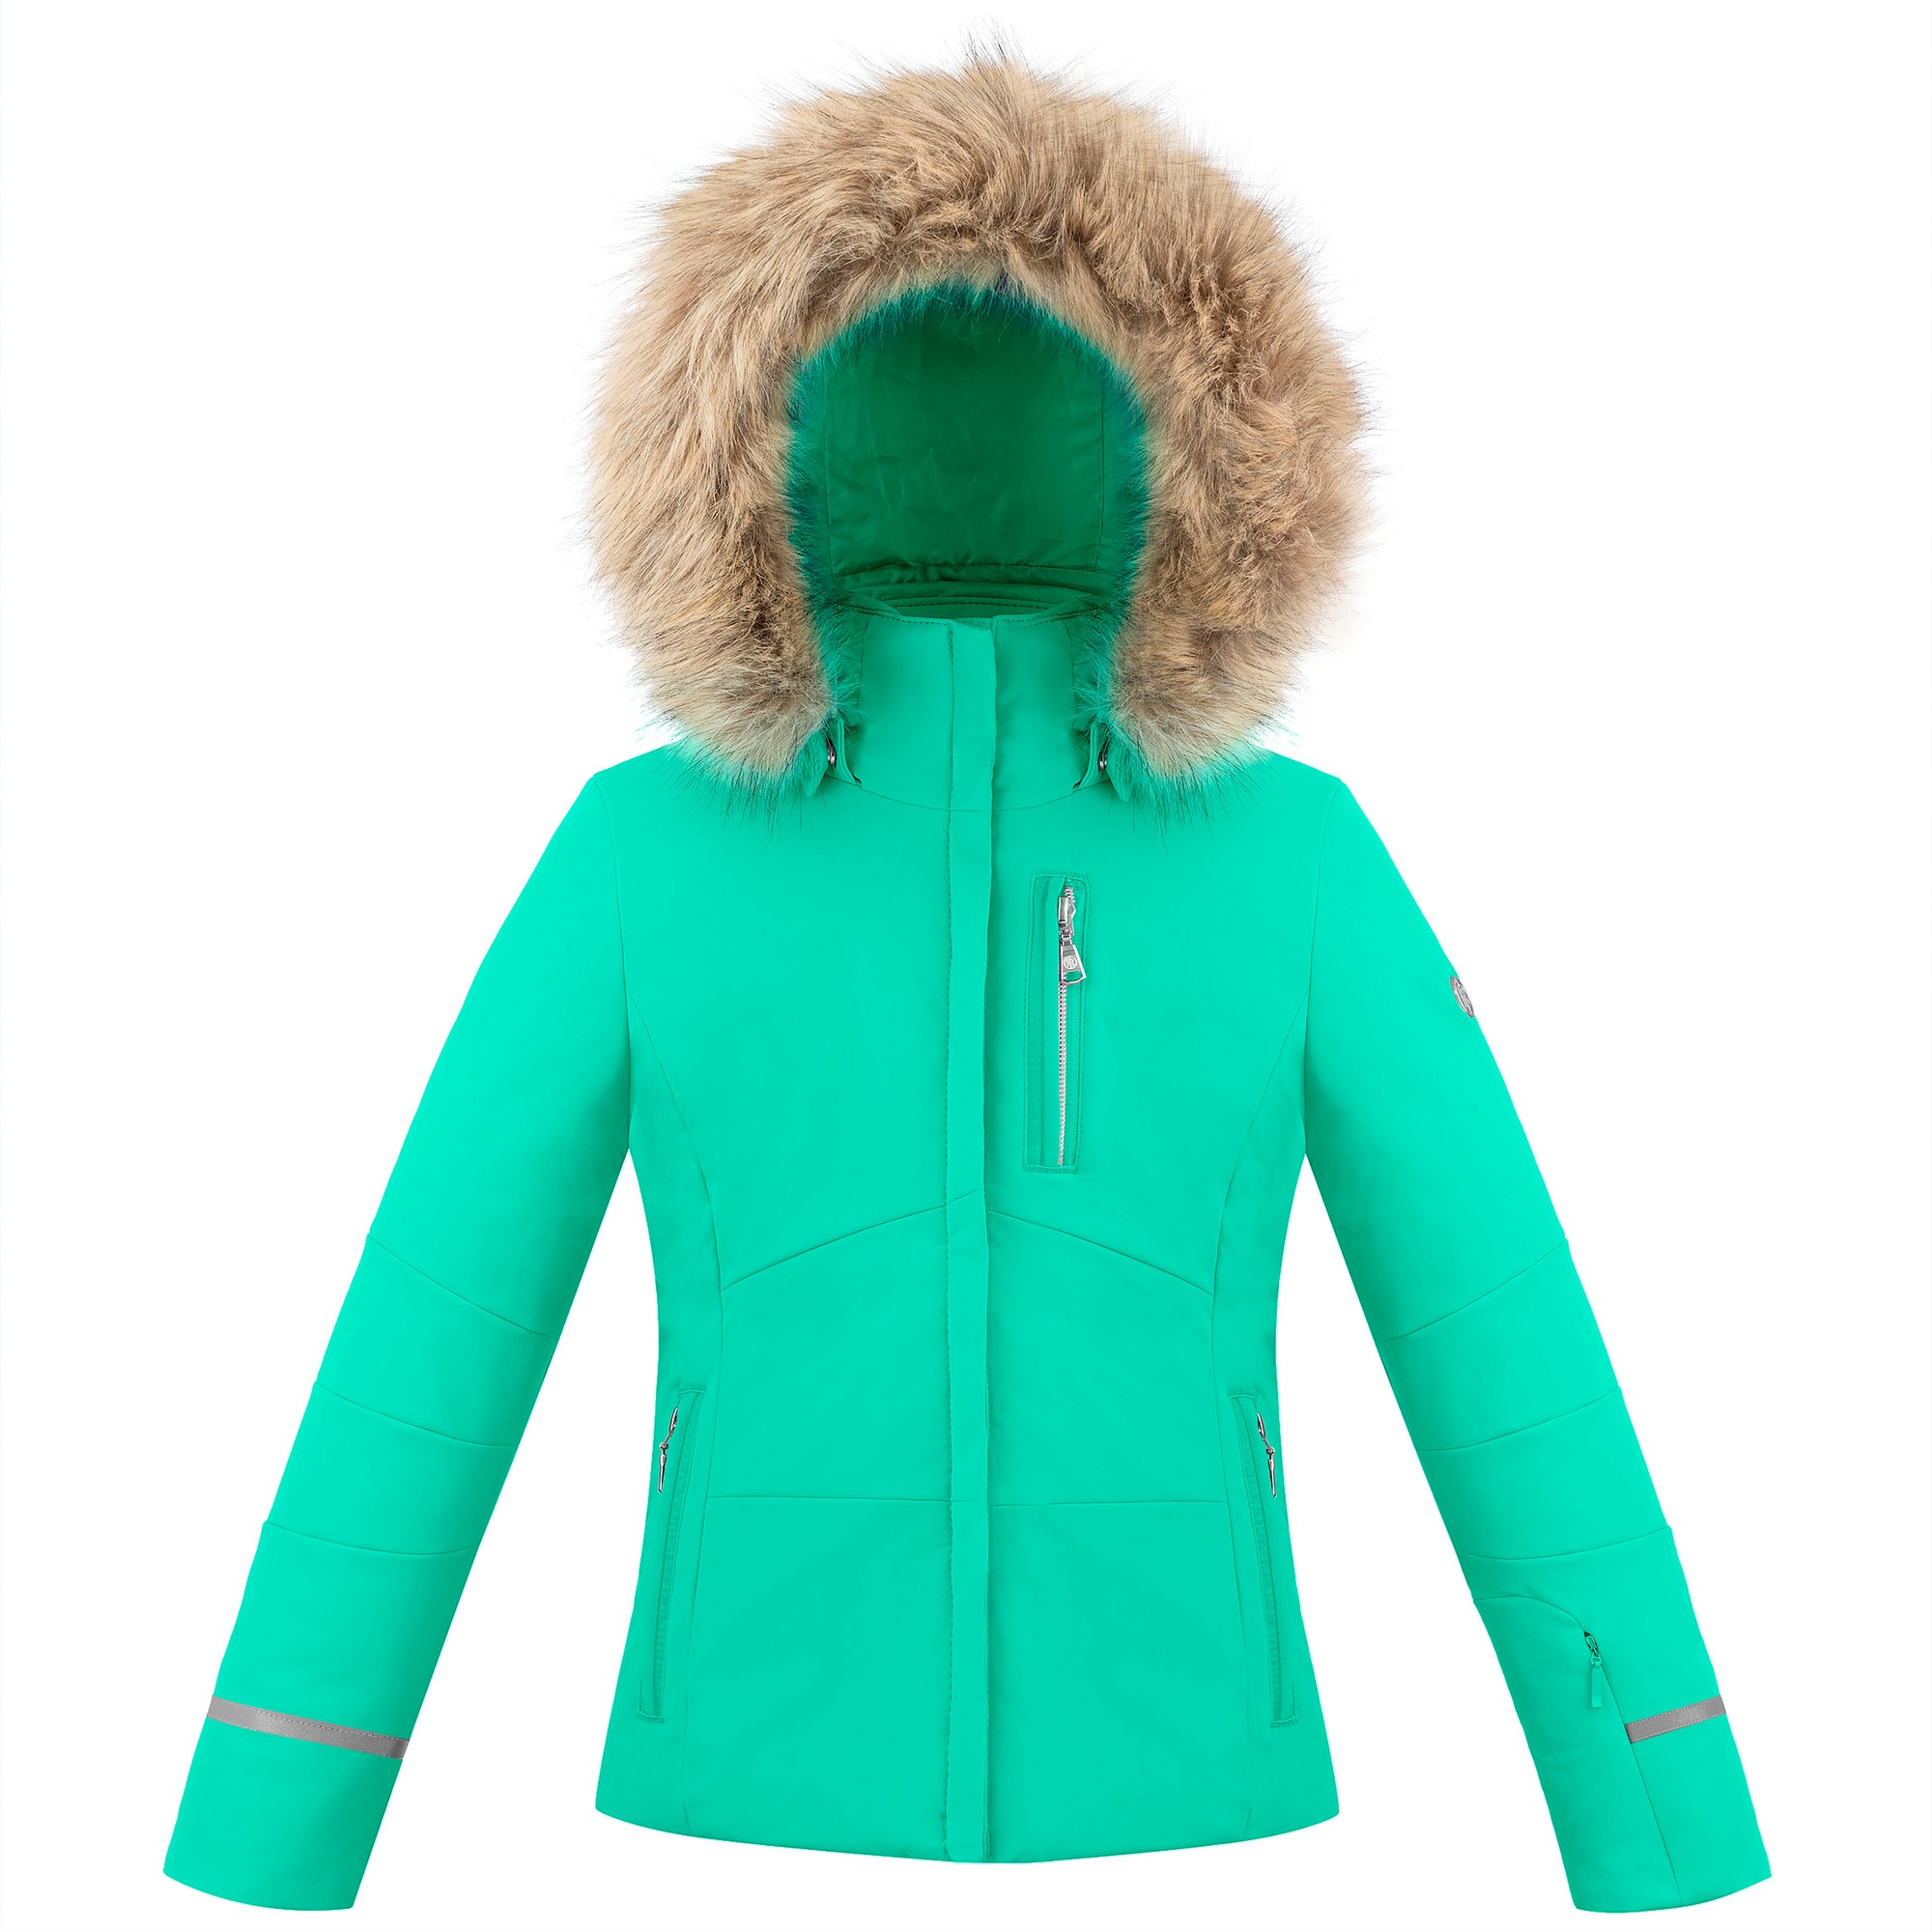 Geci Ski & Snow -  poivre blanc Stretch Ski Jacket 274003